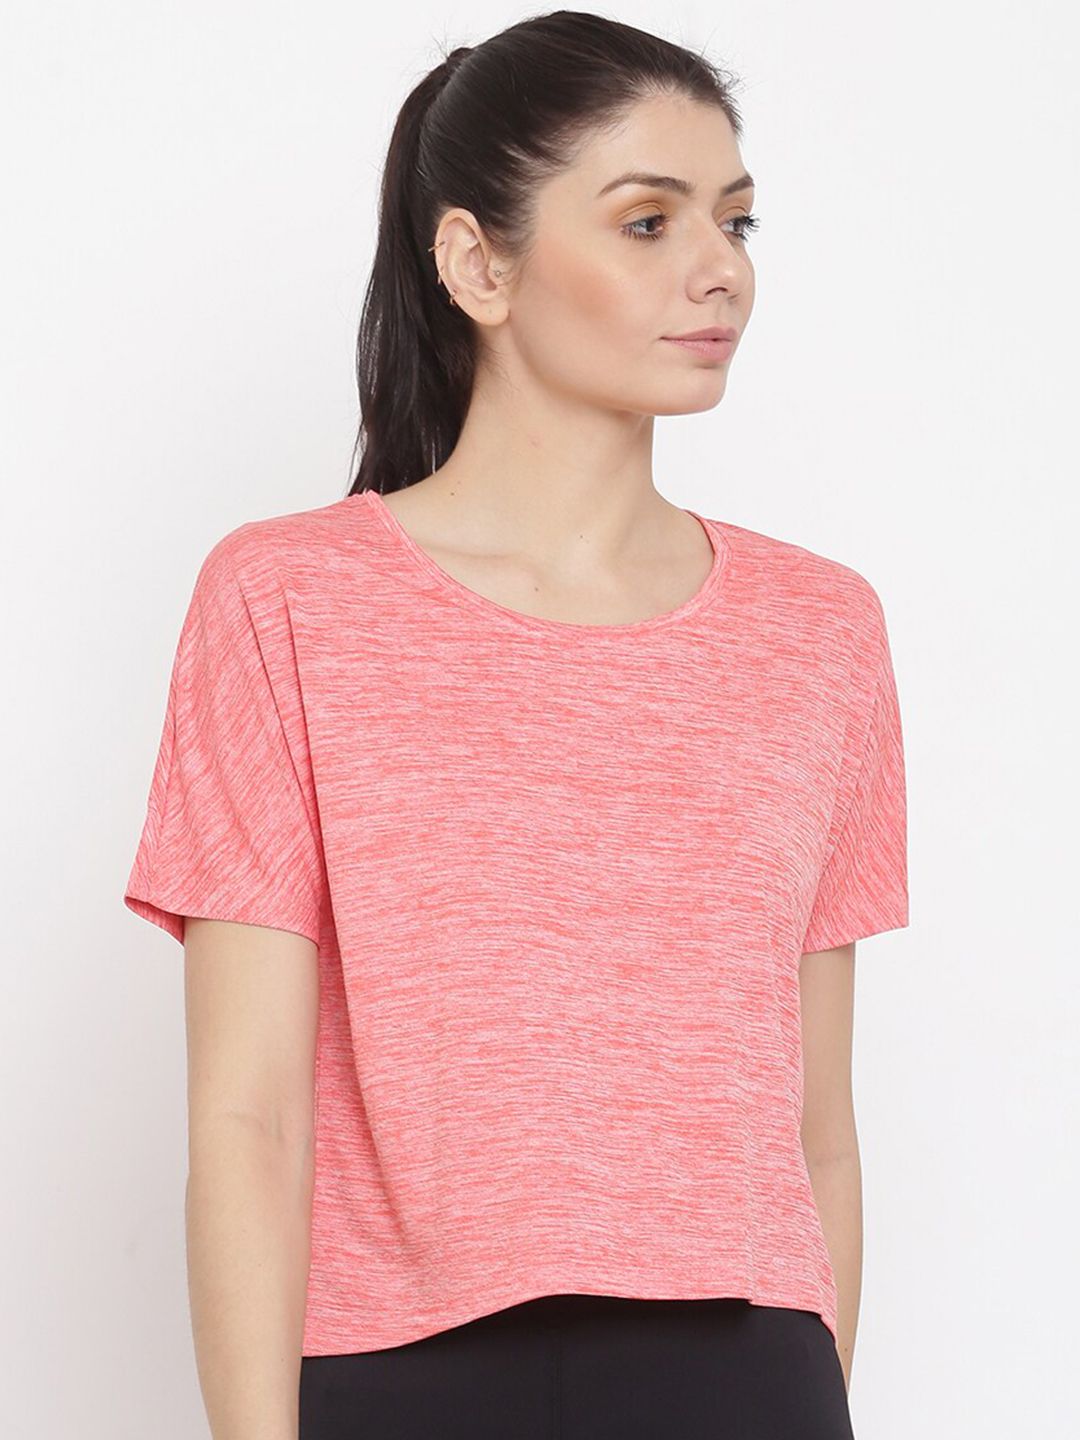 MKH Women Peach-Coloured Dri-FIT T-shirt Price in India